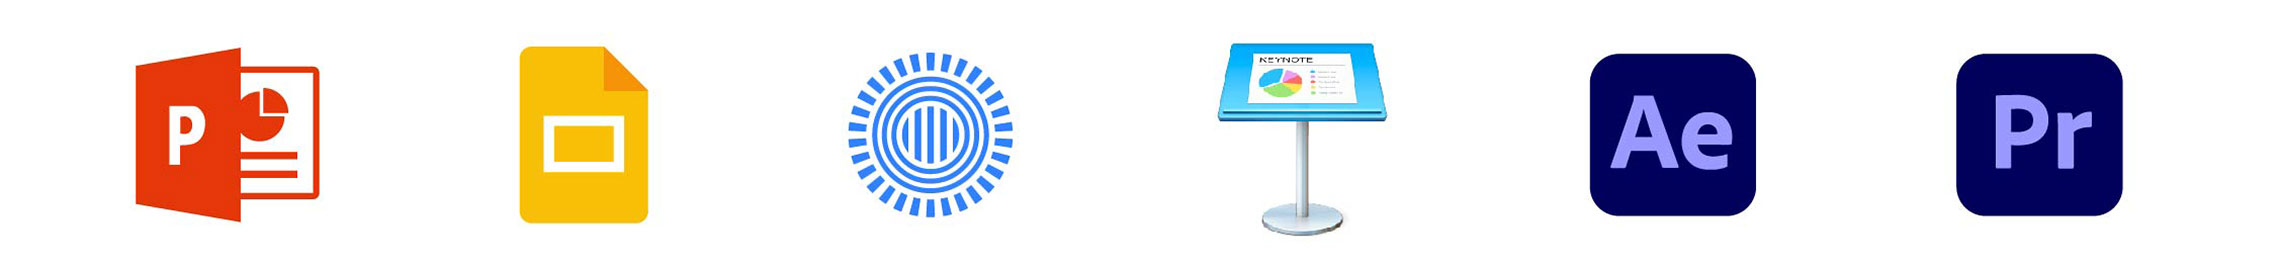 Logos for various presentation platforms including Microsoft Powerpoint, Google Slides, Prezi, Mac Keynote, Adobe After Effects, Adobe Premiere Pro